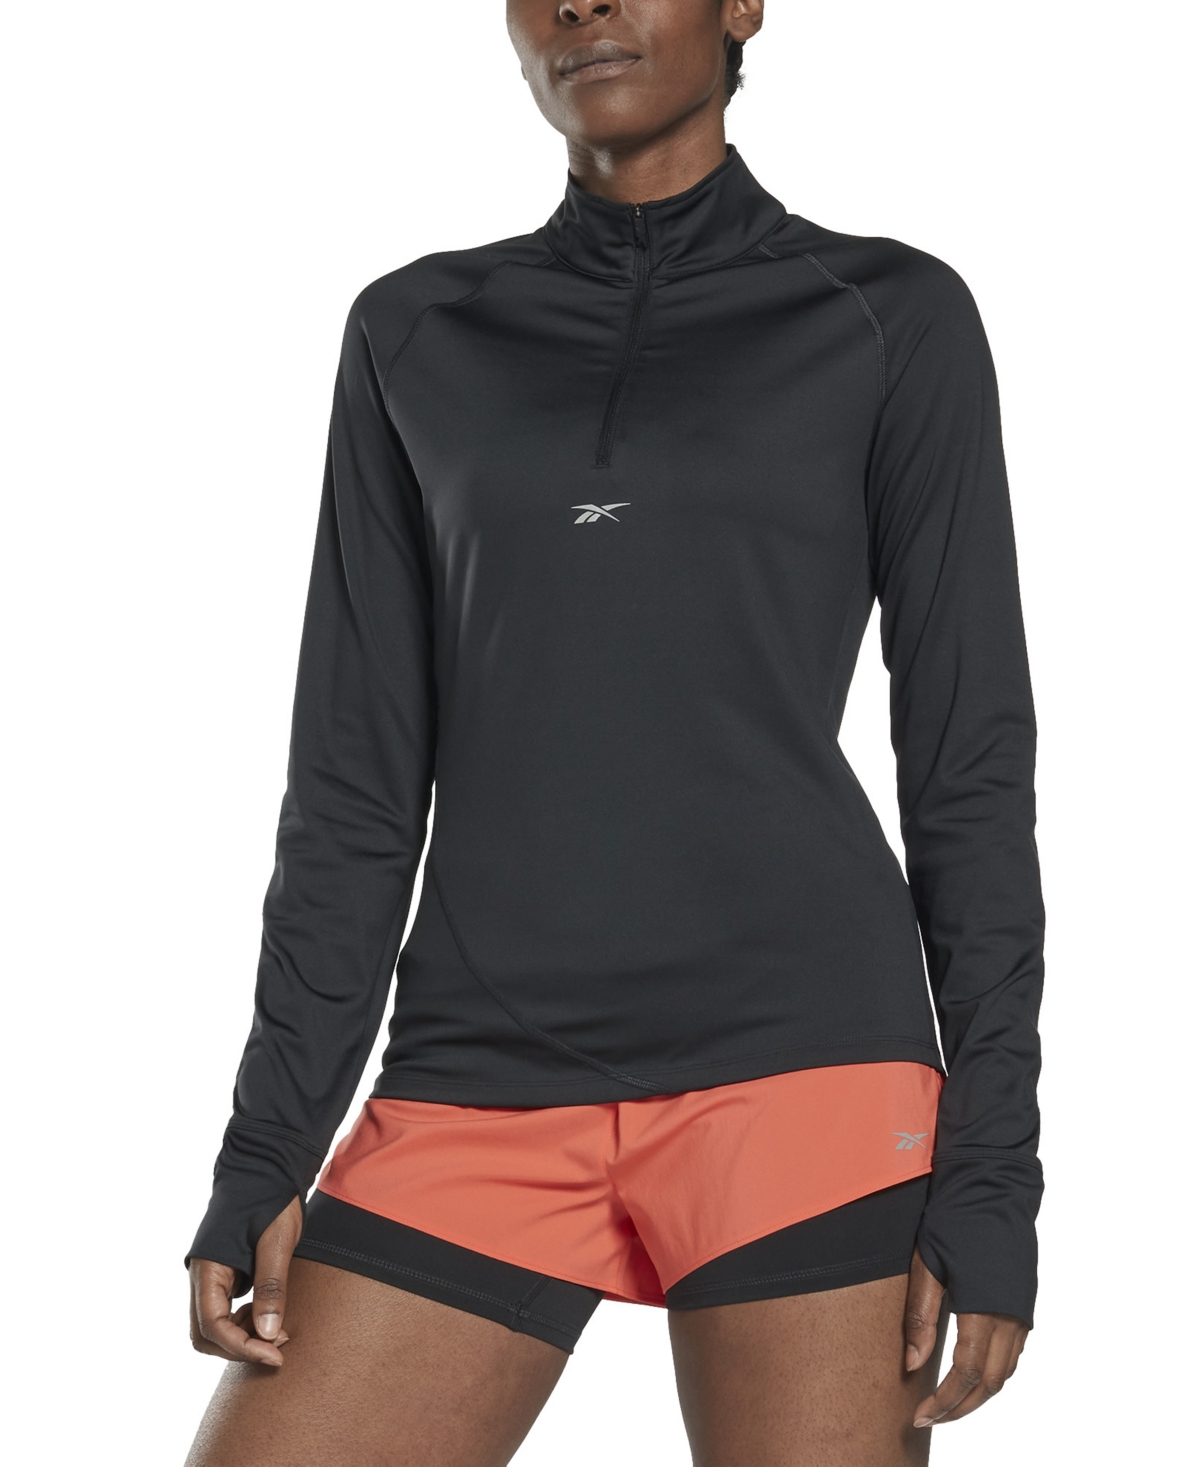  Reebok Women's Active Running Quarter-Zip Thumbhole Sweatshirt